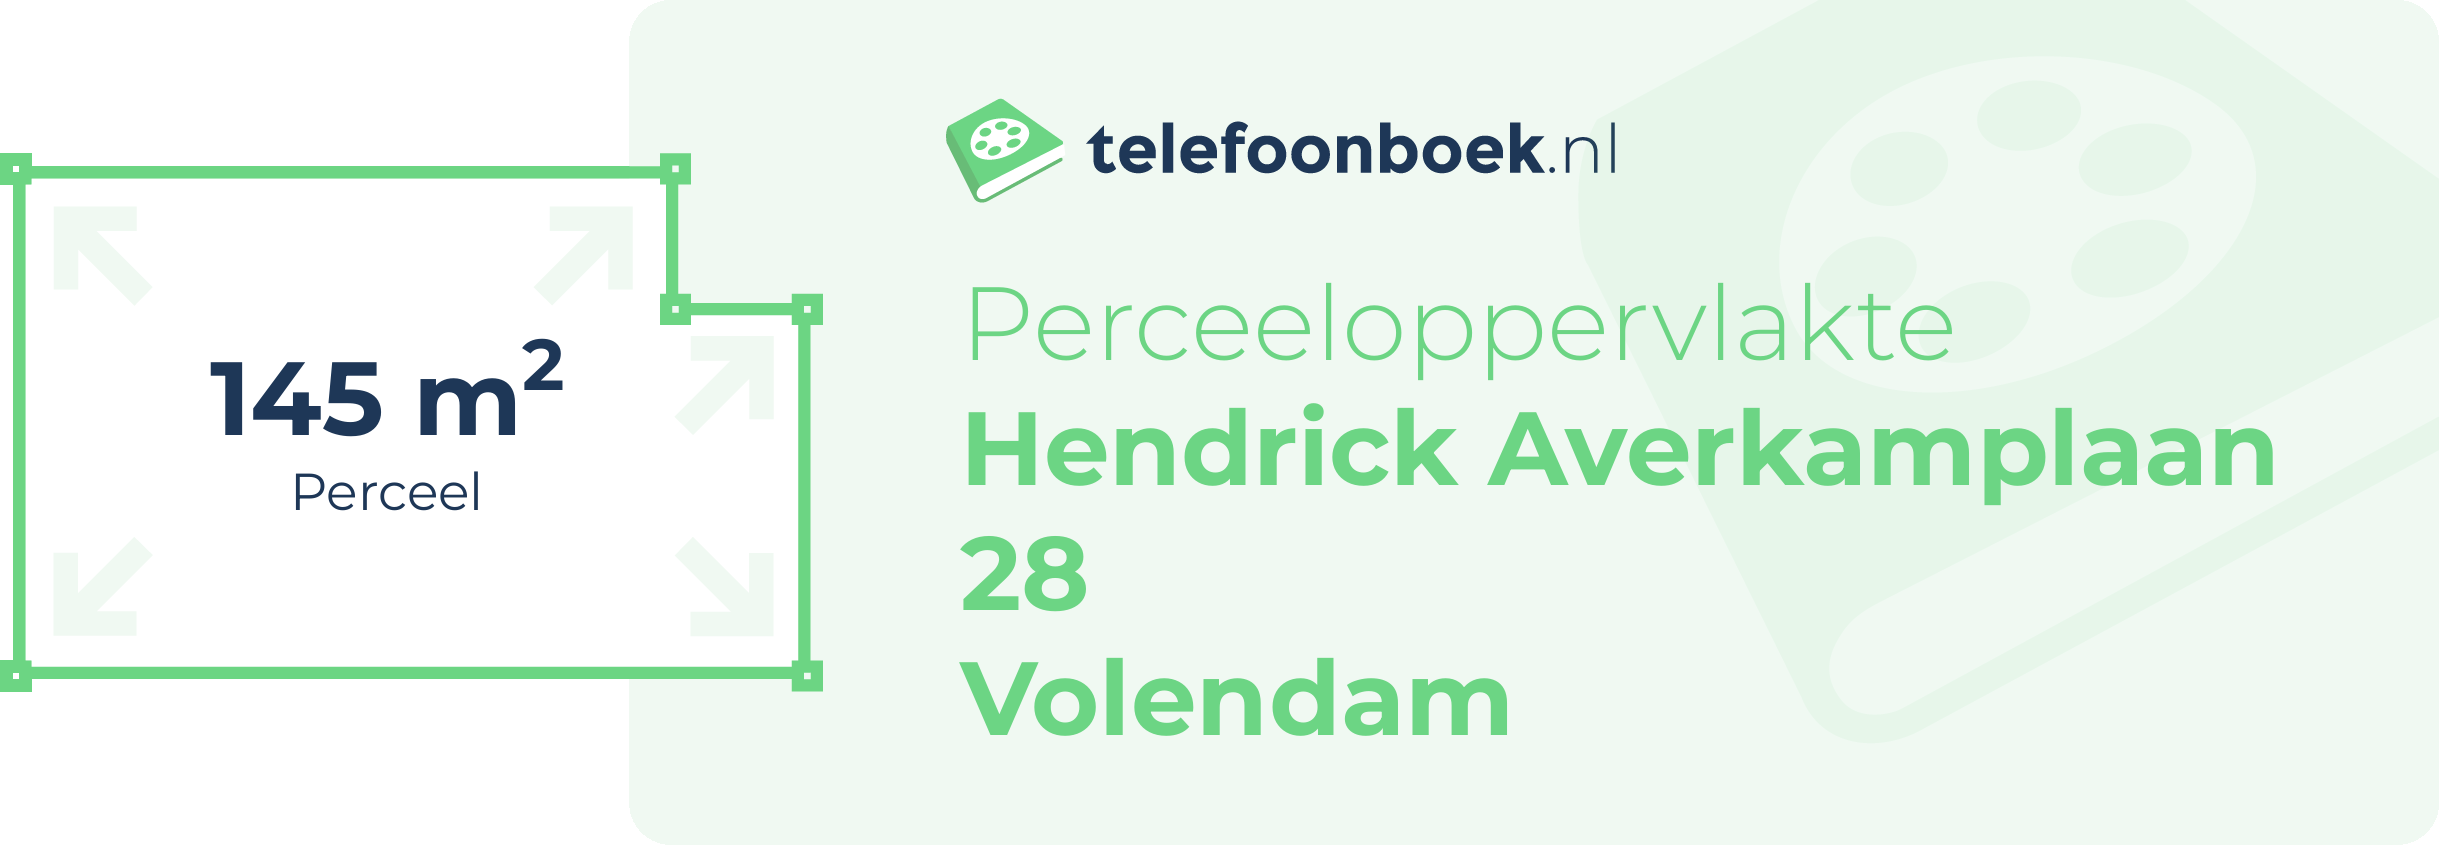 Perceeloppervlakte Hendrick Averkamplaan 28 Volendam